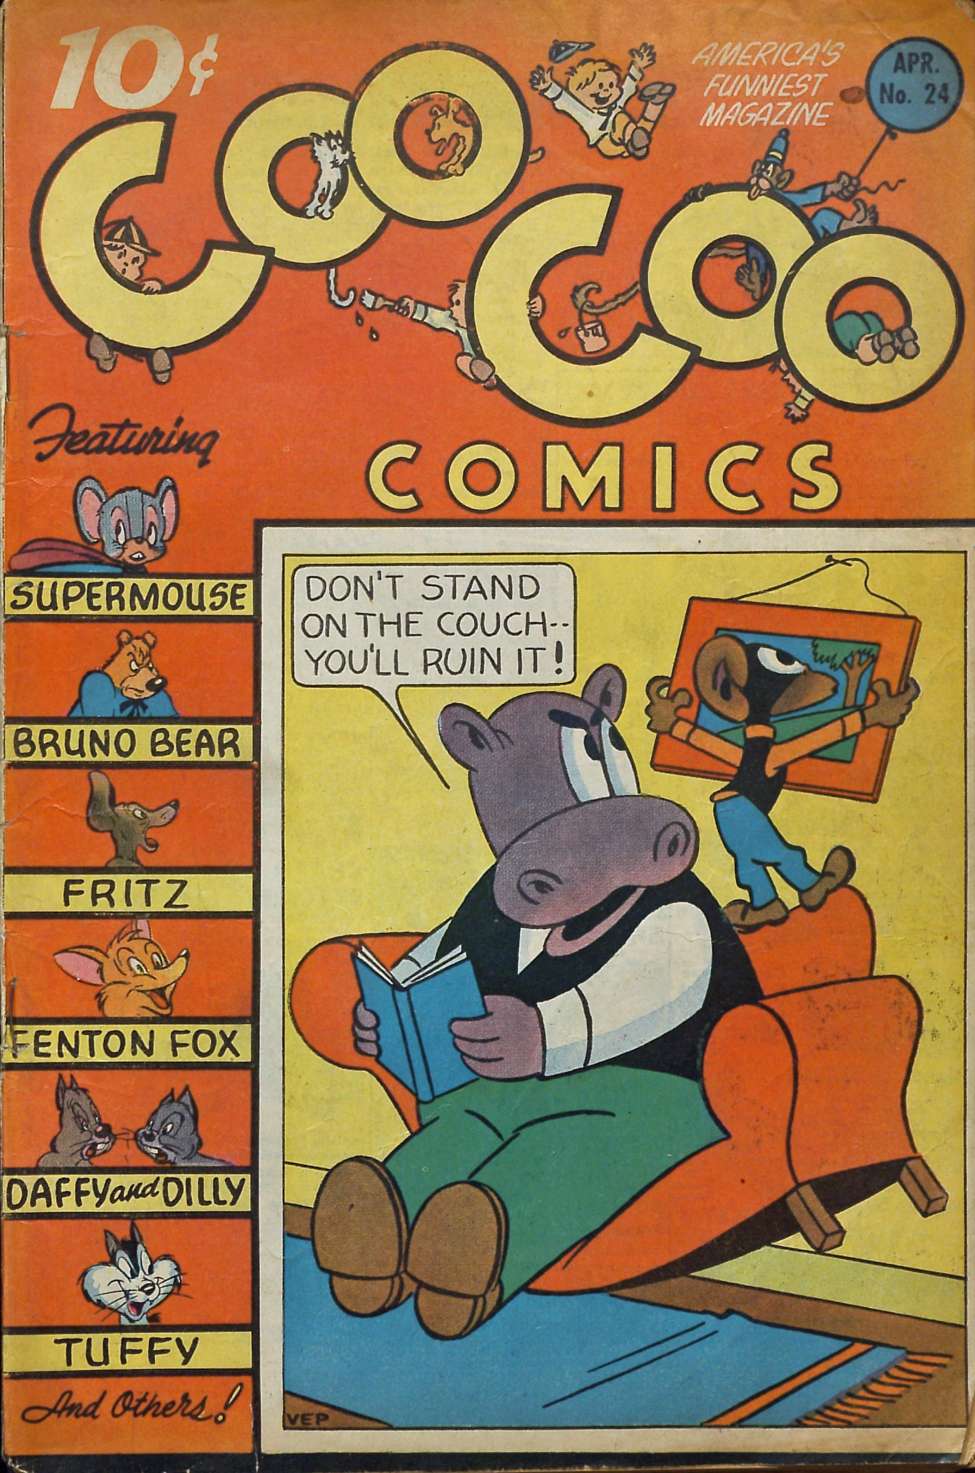 Comic Book Cover For Coo Coo Comics 24